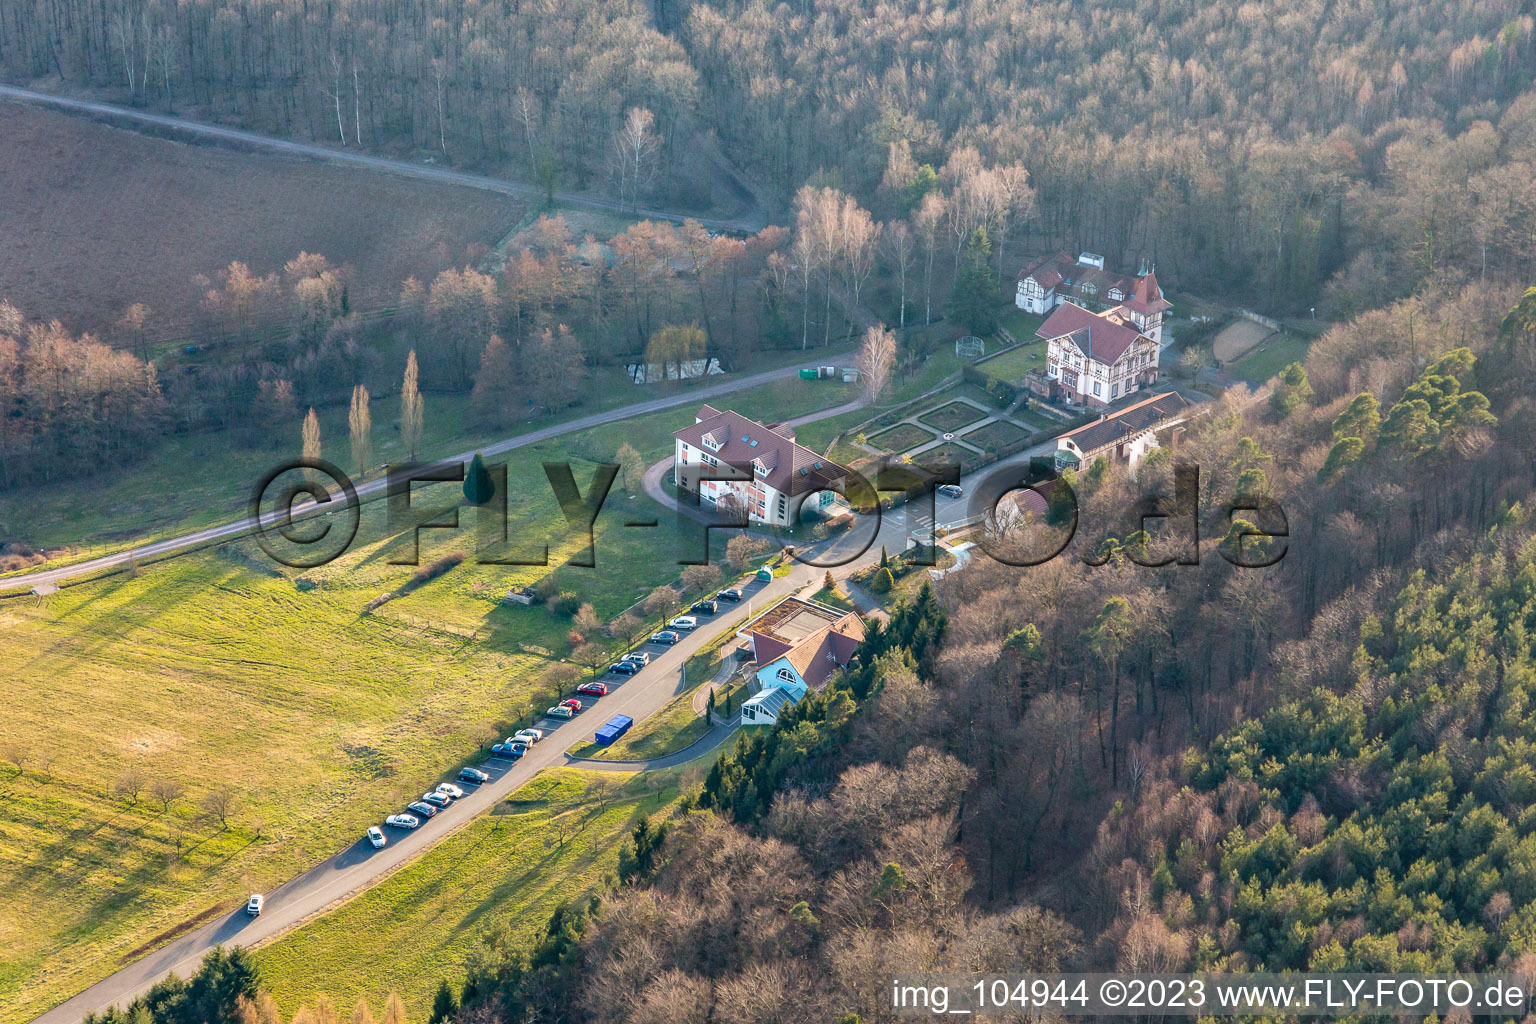 Luftbild von Marienbronn in Lobsann im Bundesland Bas-Rhin, Frankreich